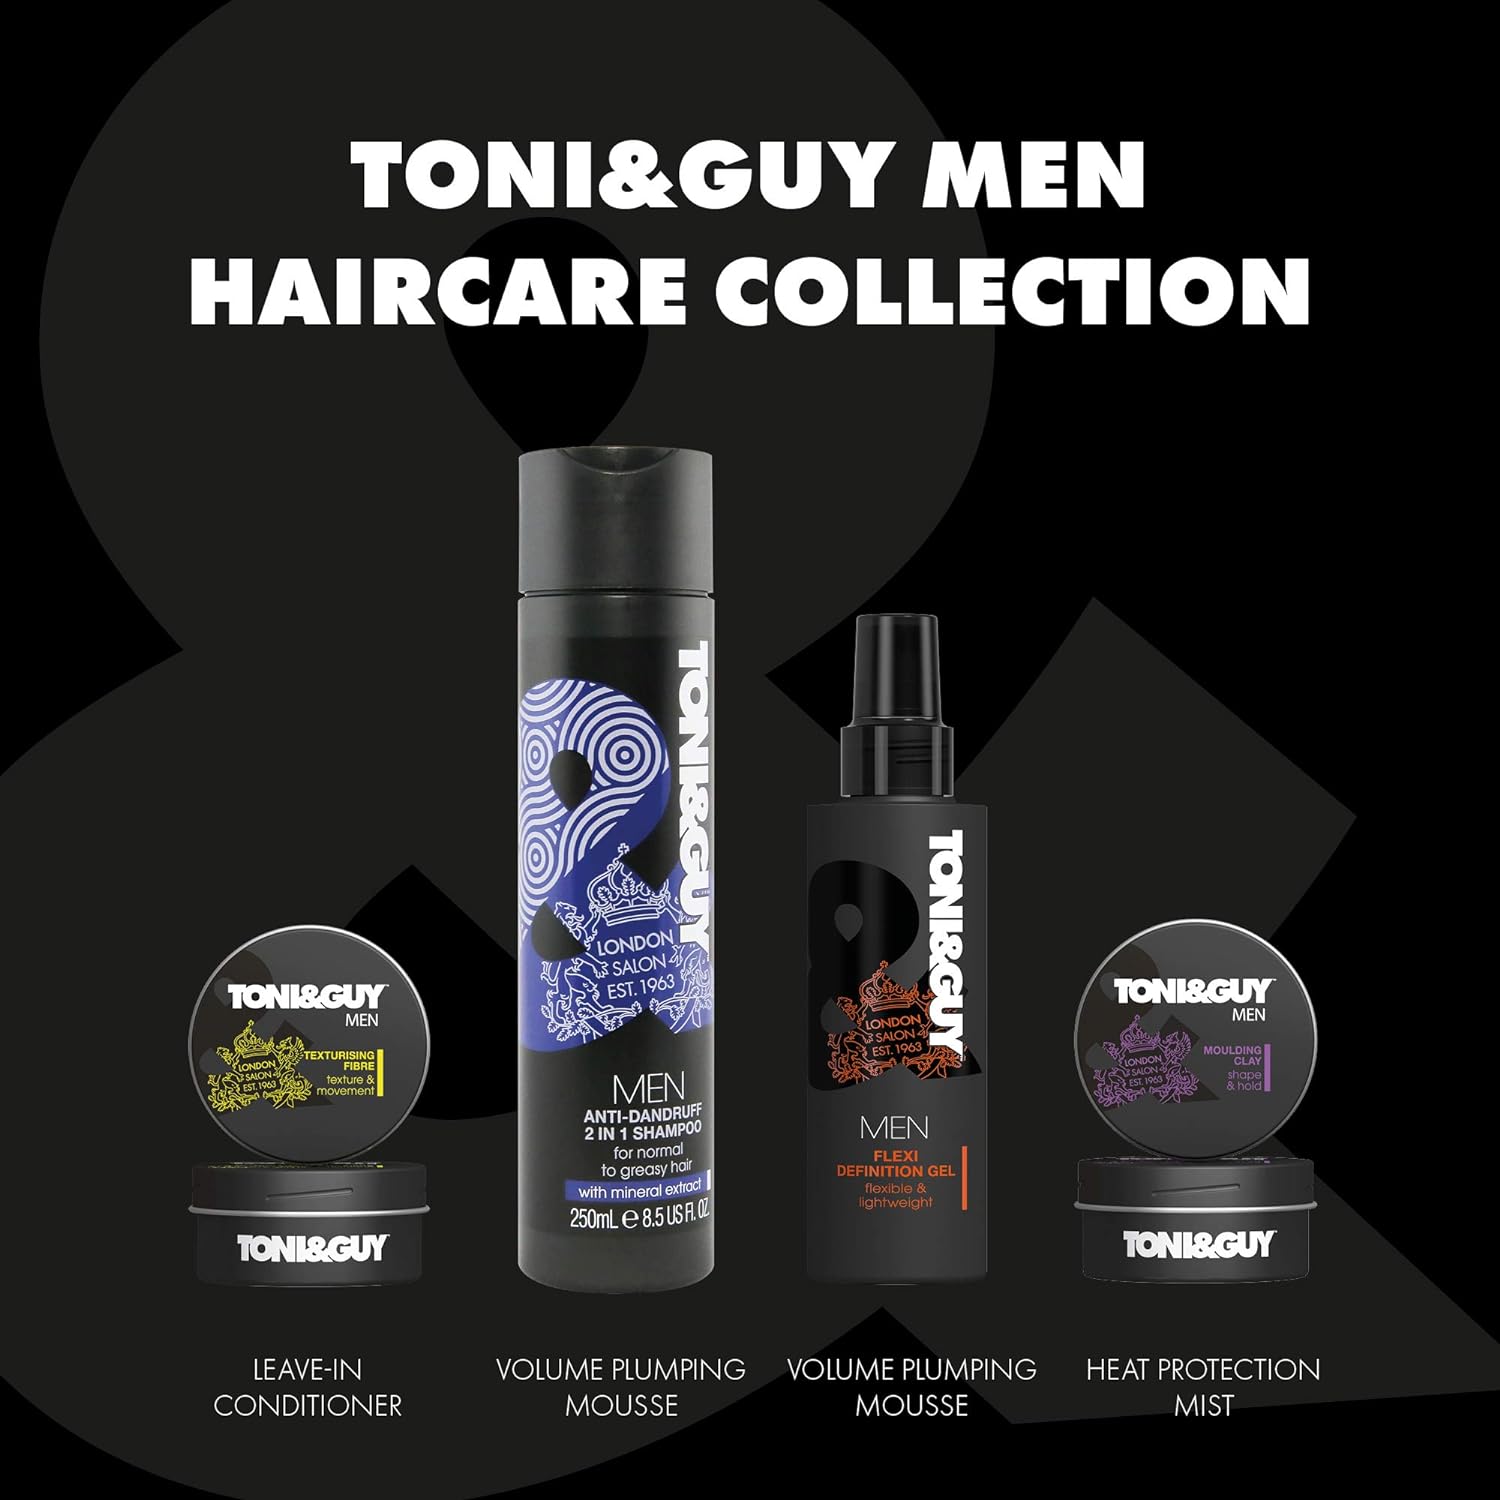 Toni&Guy Men Anti-Dandruff 2-in-1 Shampoo